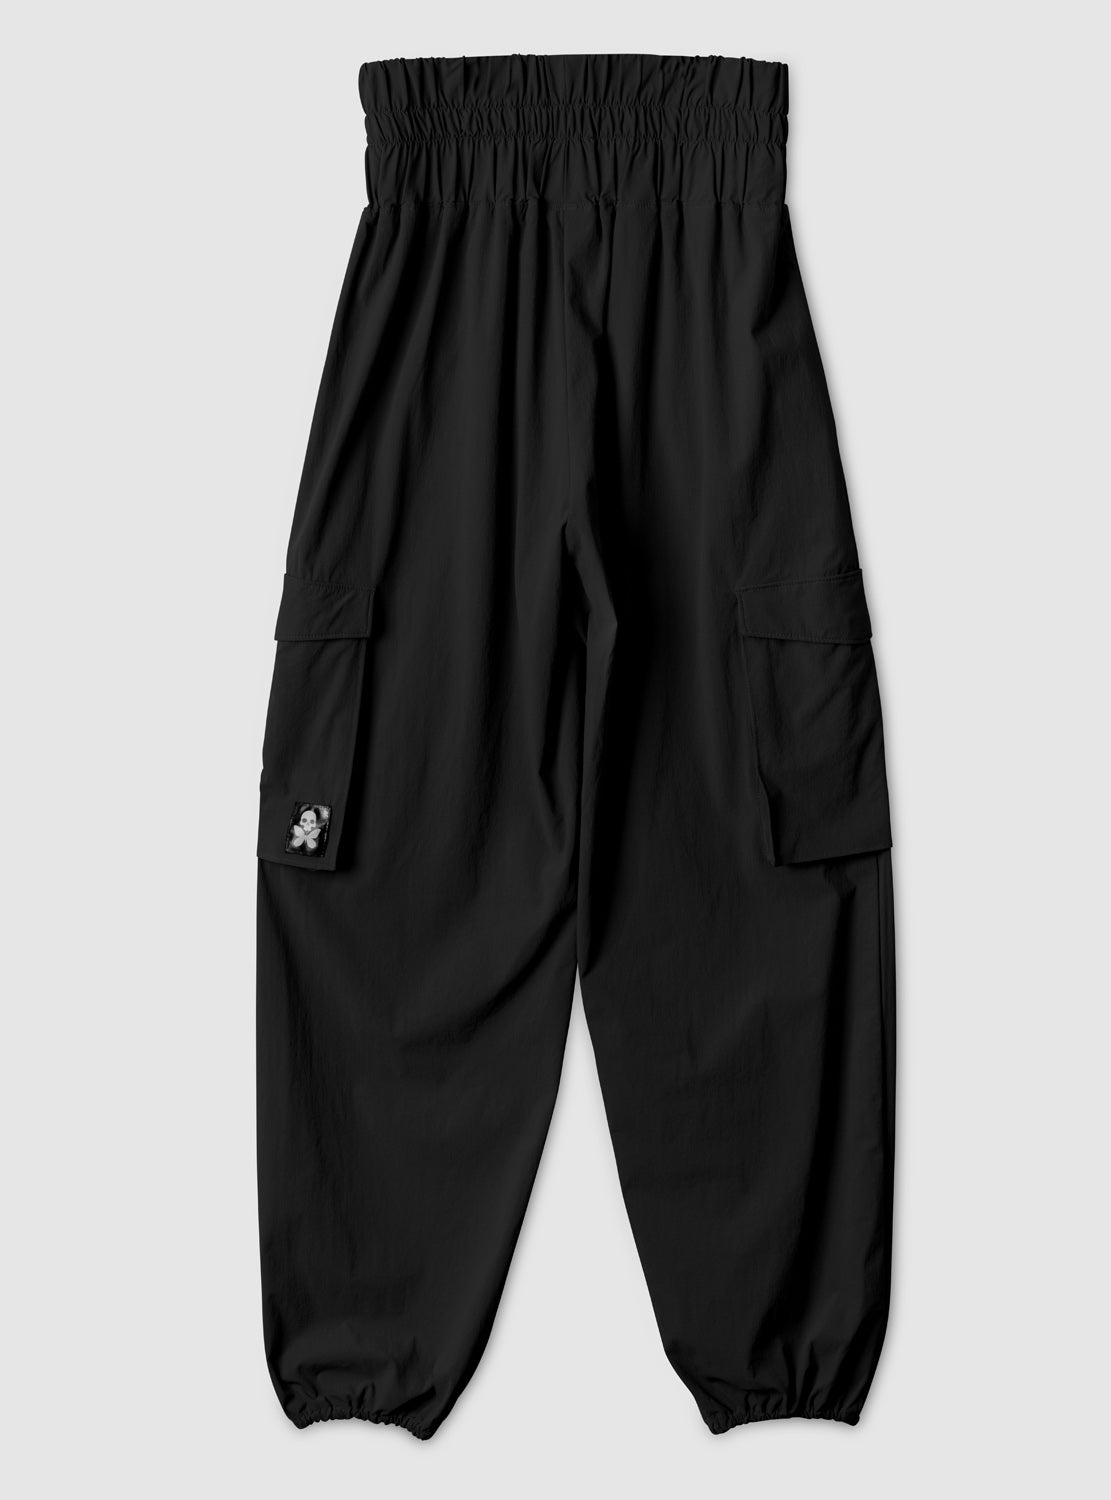 betty designs BDlab sportswear apparel for women cargo pants